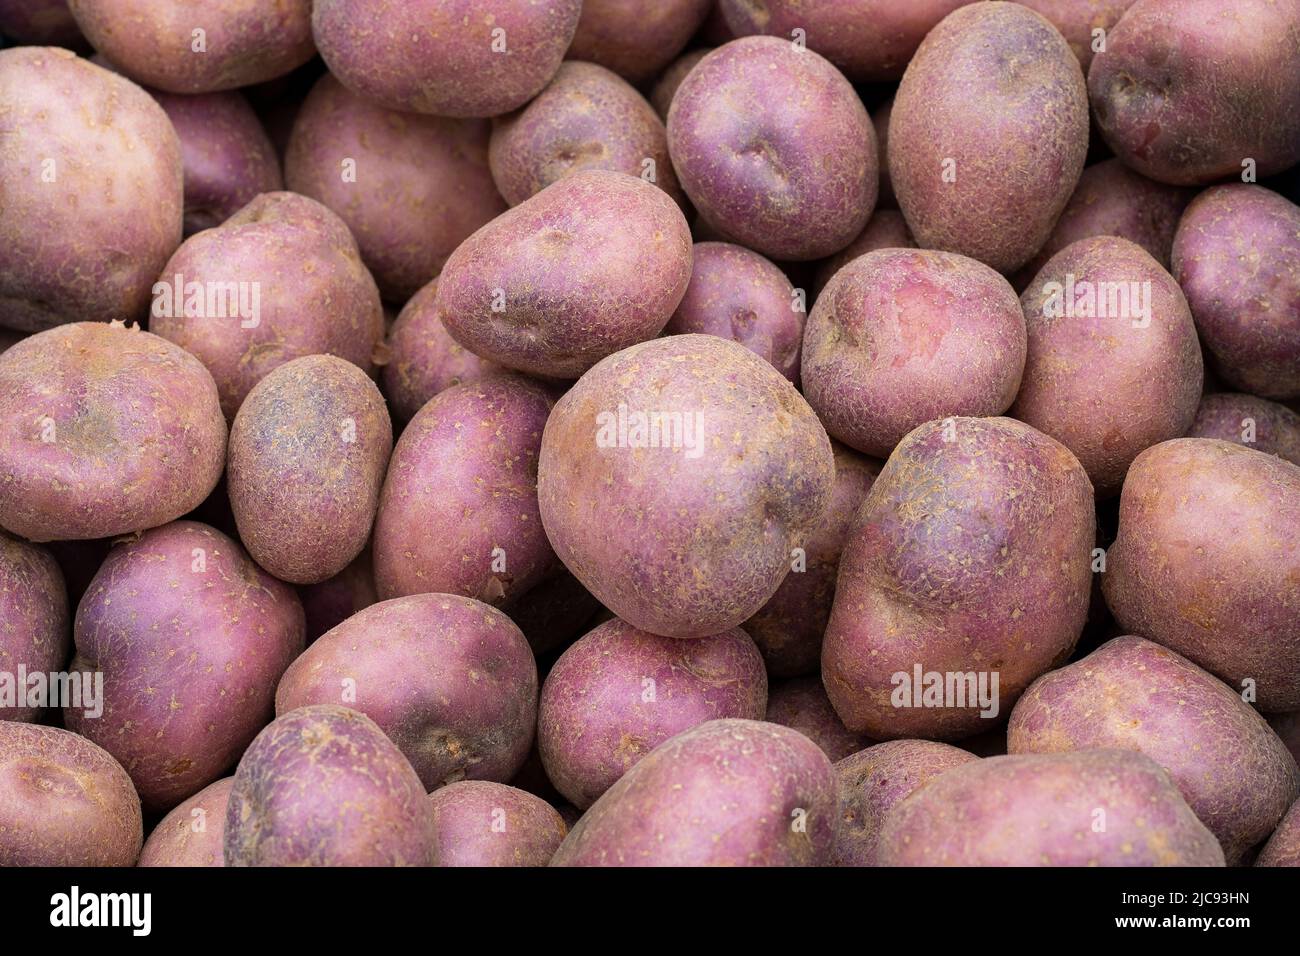 Solanum tuberosum - fresh potatoes Stock Photo